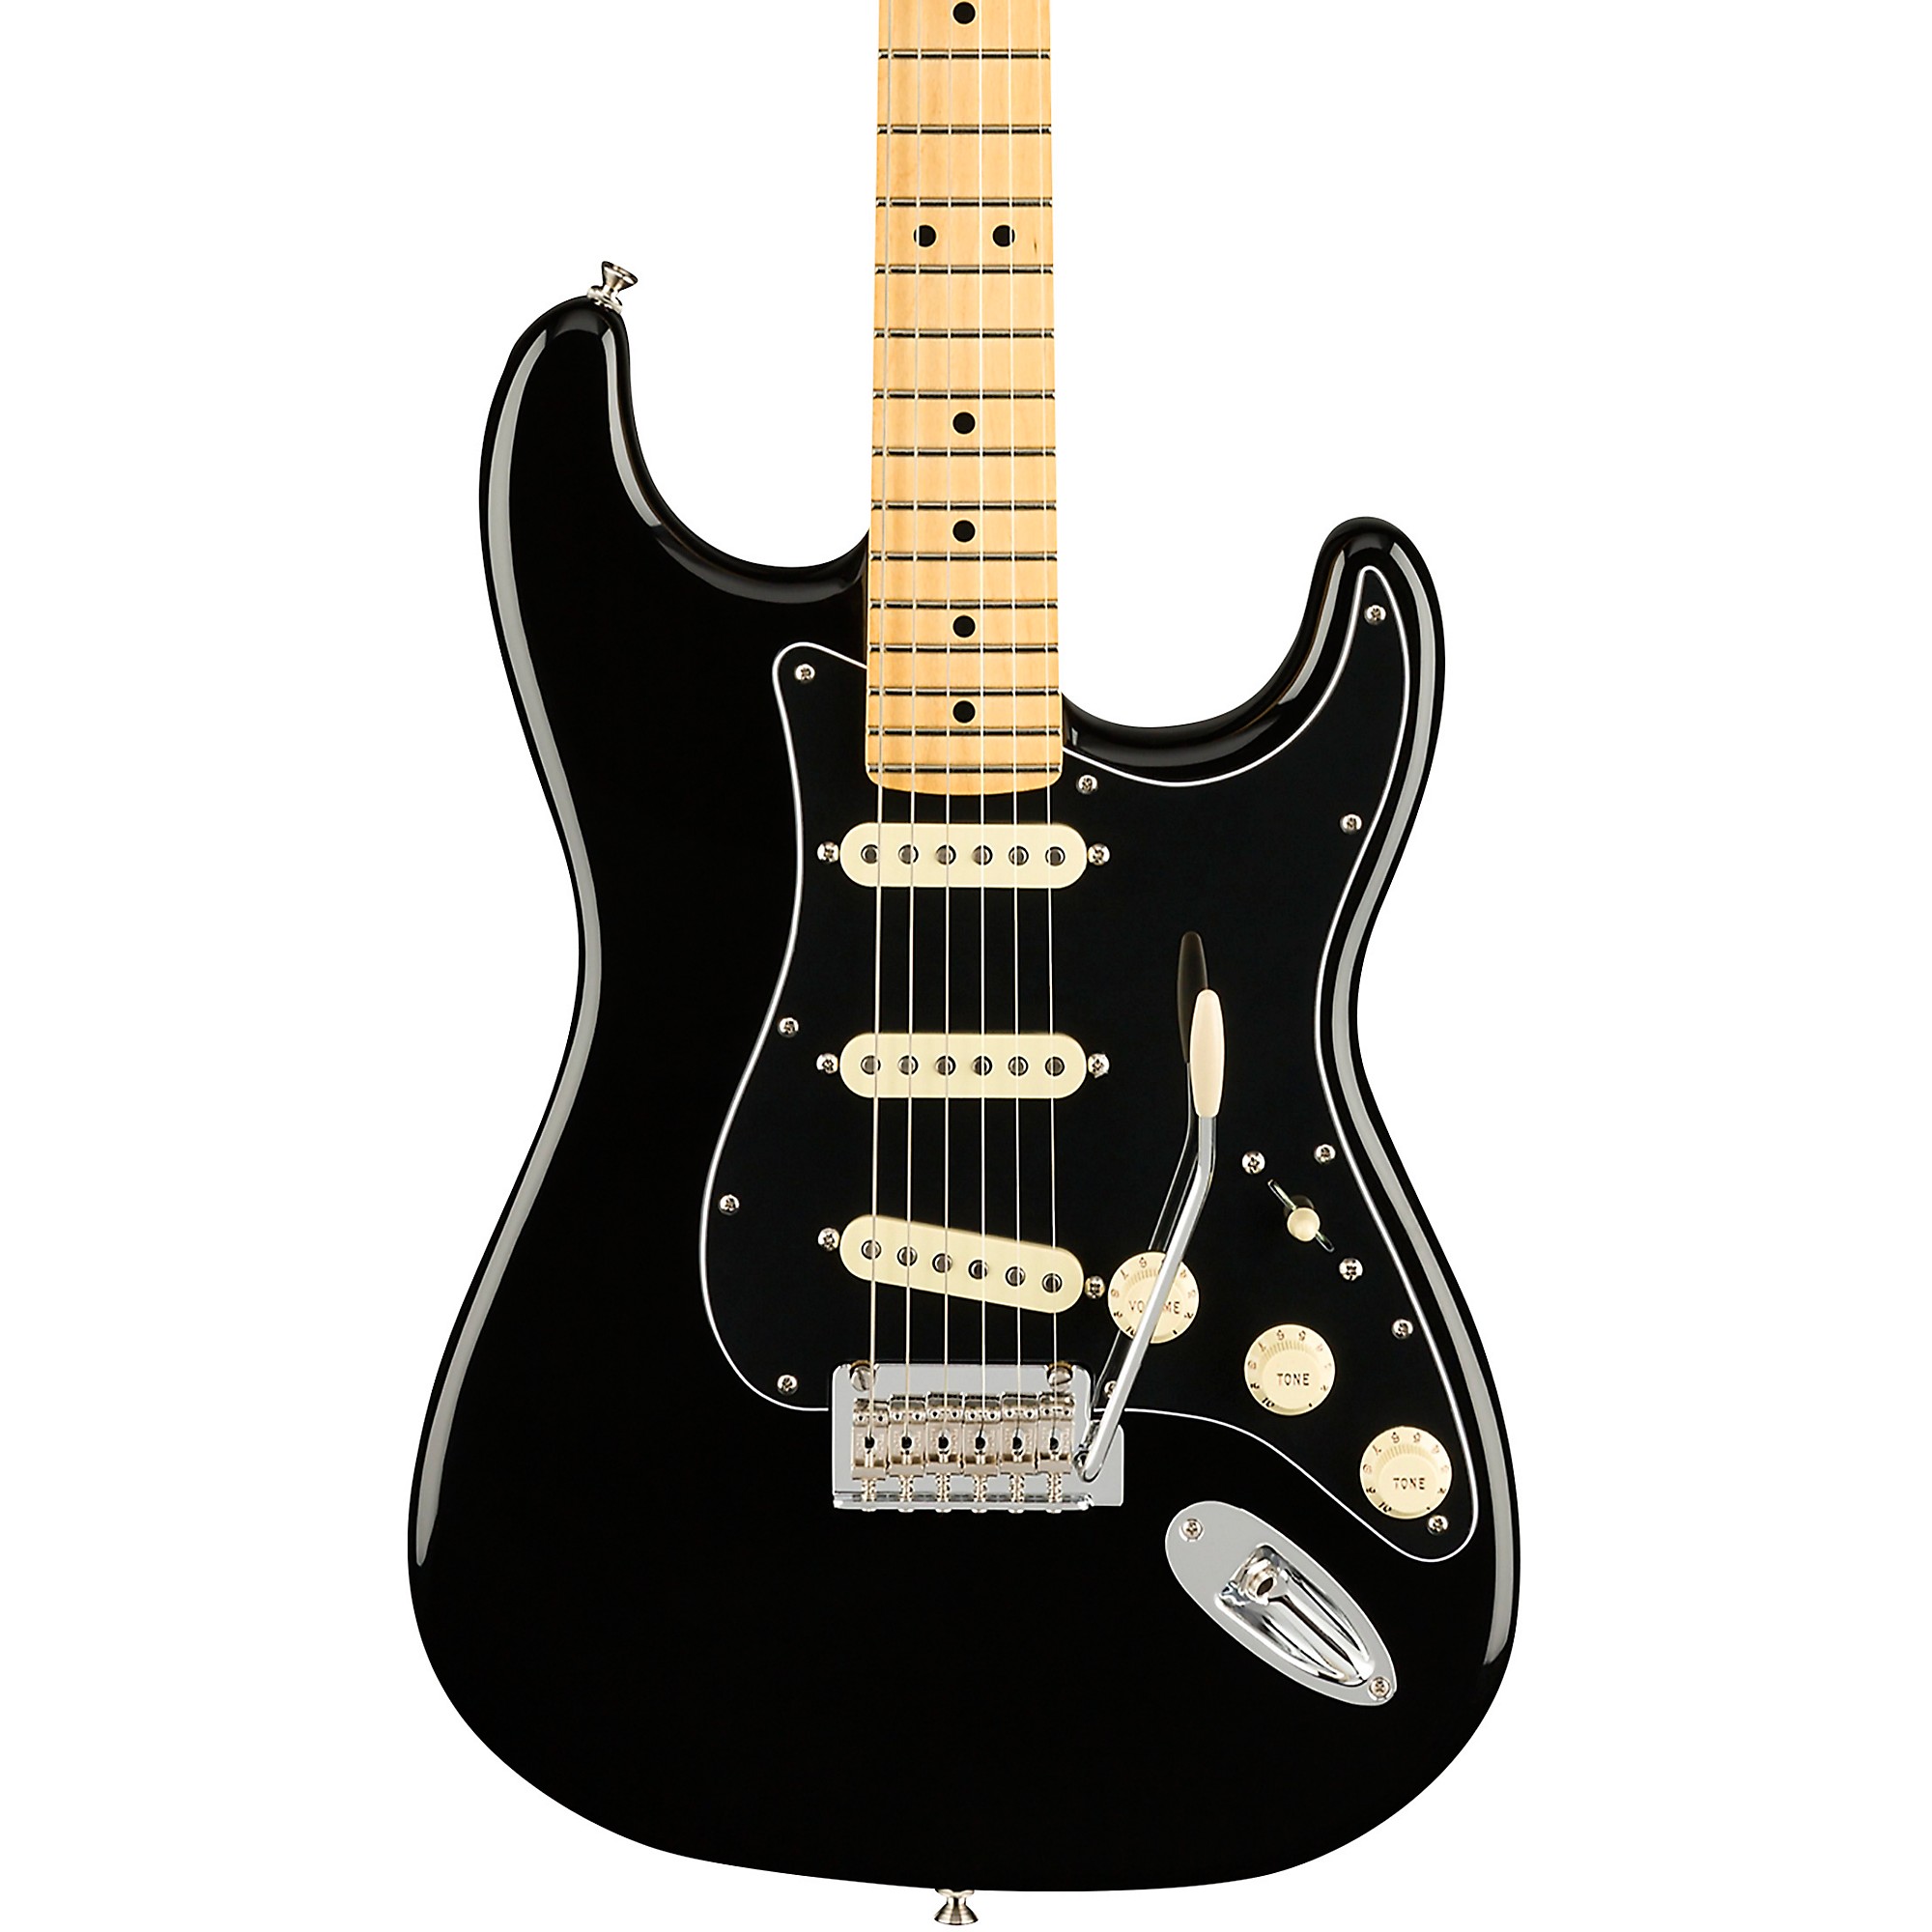 Astrolabio Permeabilidad propietario Fender Player Stratocaster Maple Fingerboard Limited-Edition Electric Guitar  Black | Guitar Center